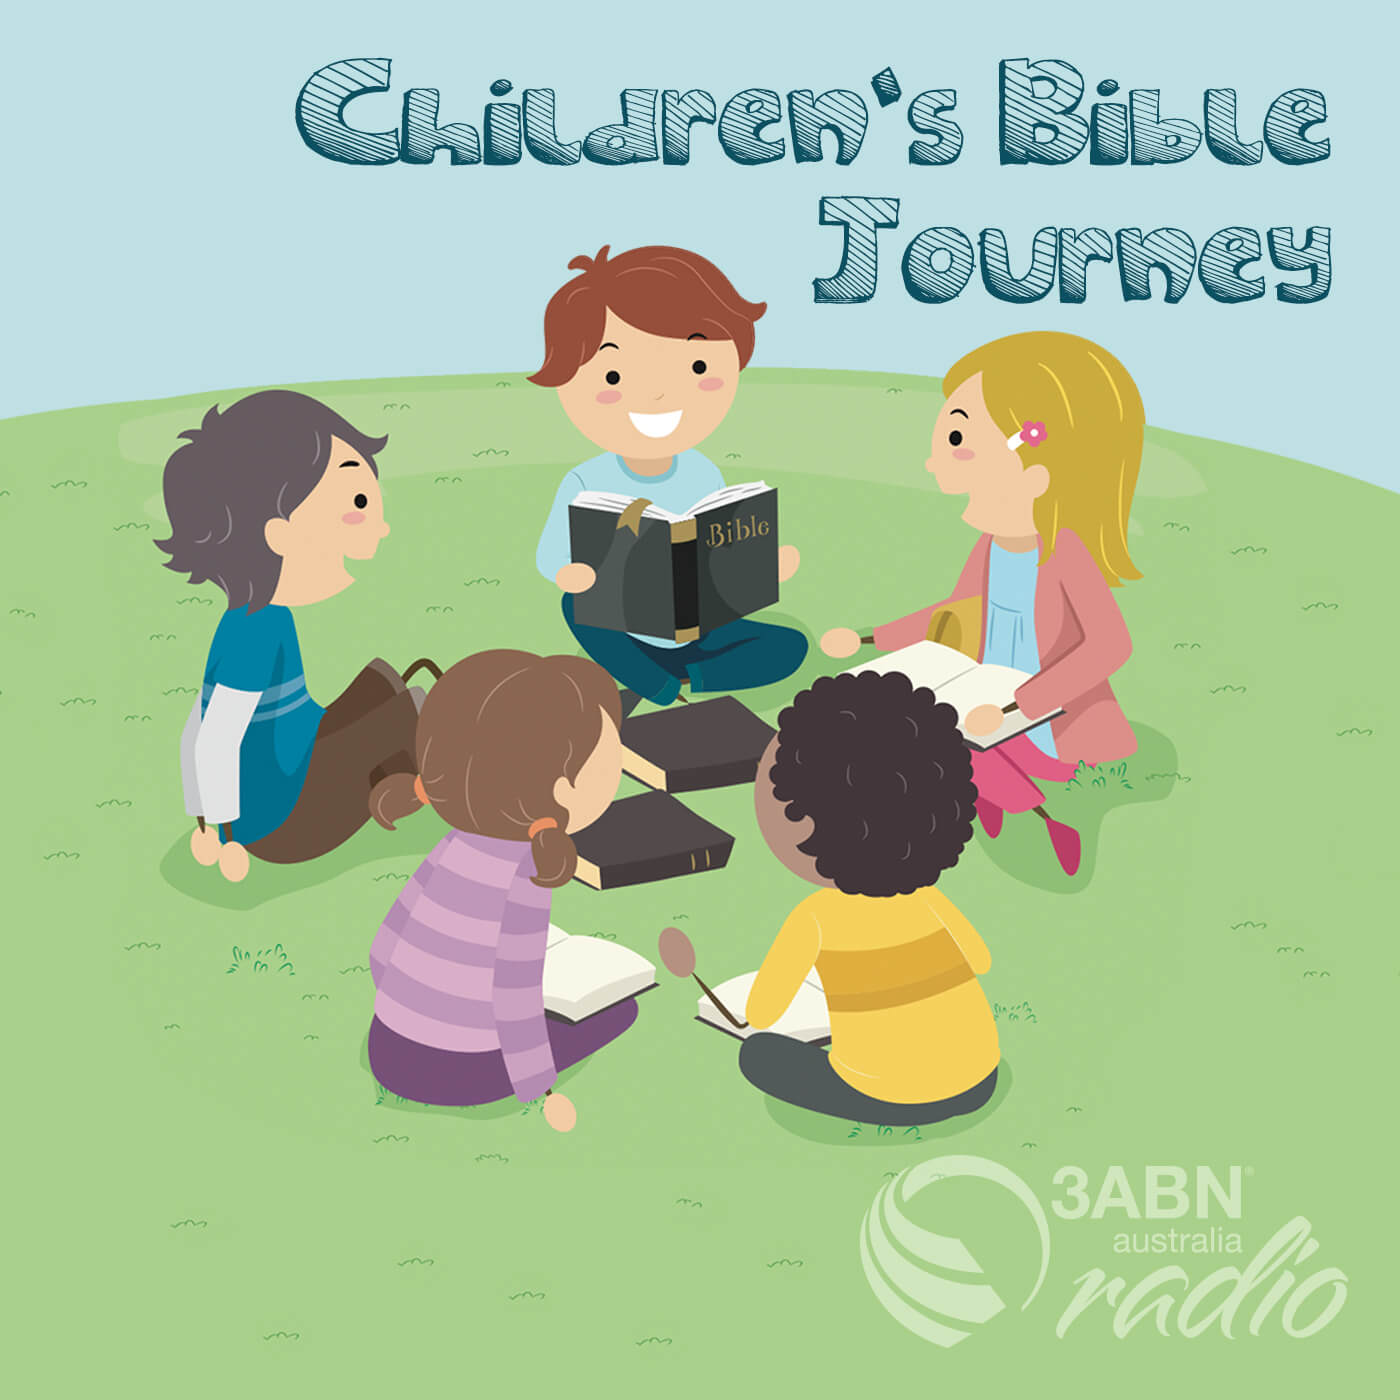 Children's Bible Journey - 2150